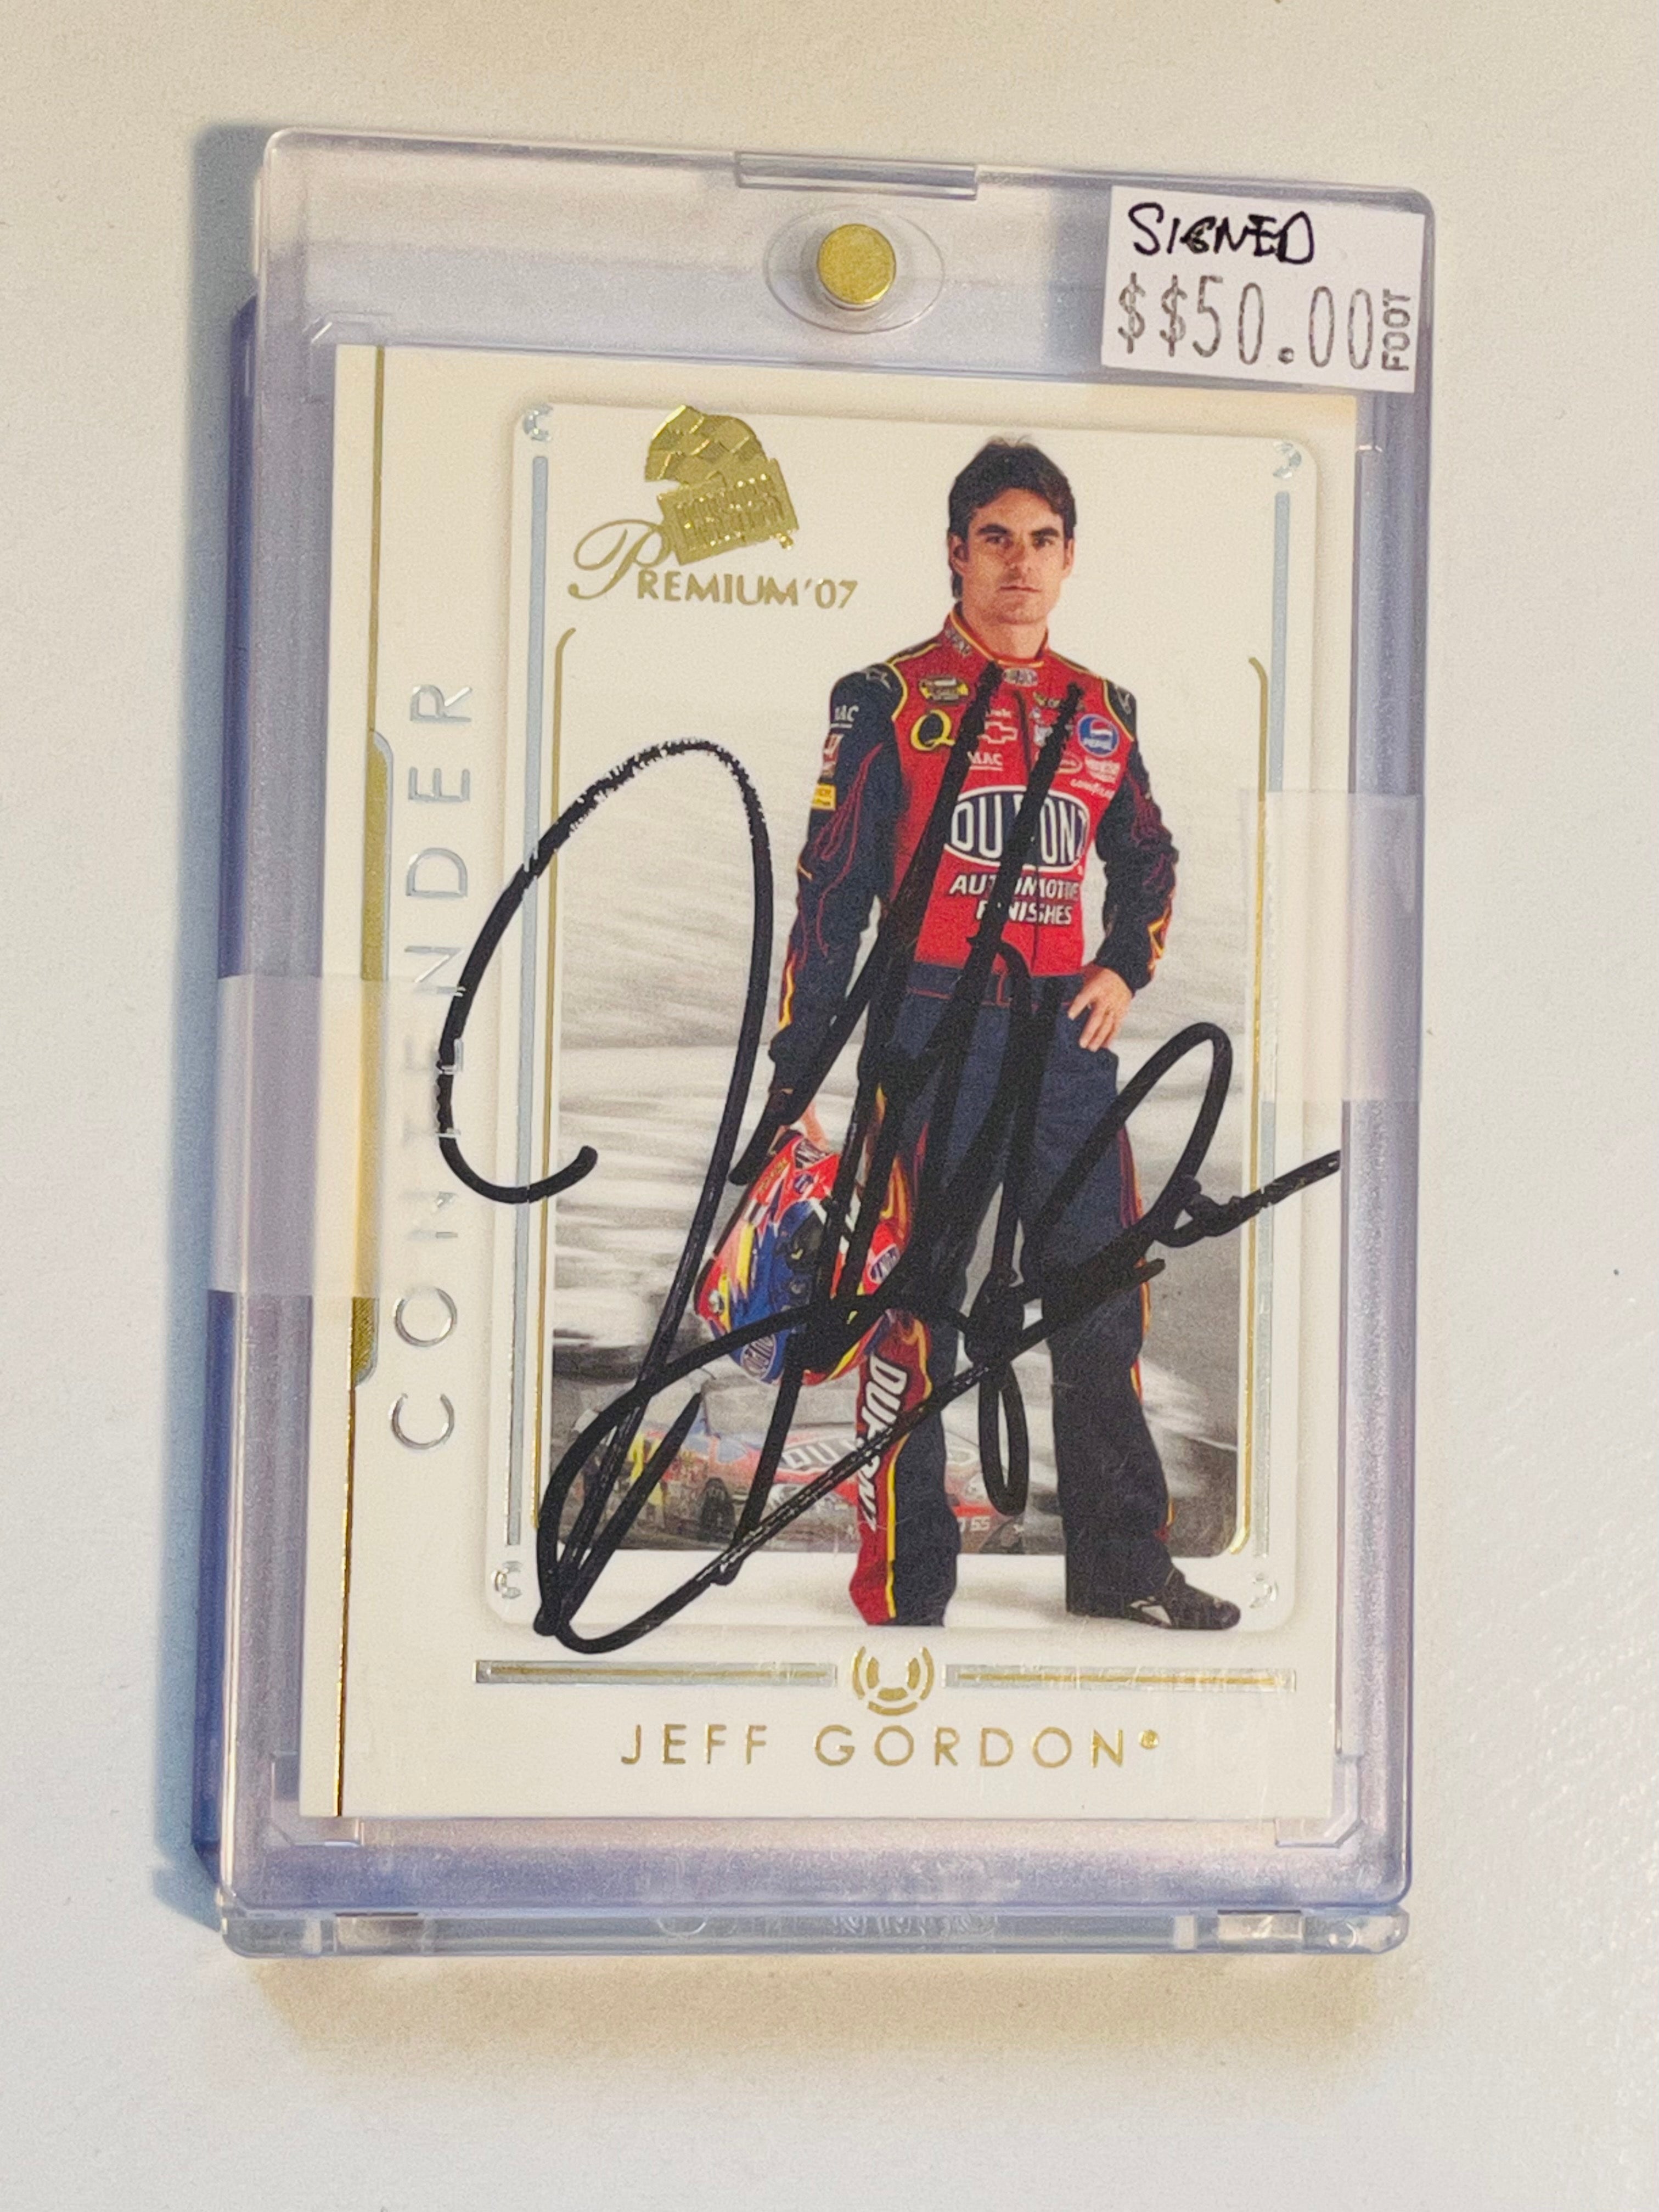 Jeff Gordon NASCAR racing legend autograph card with COA